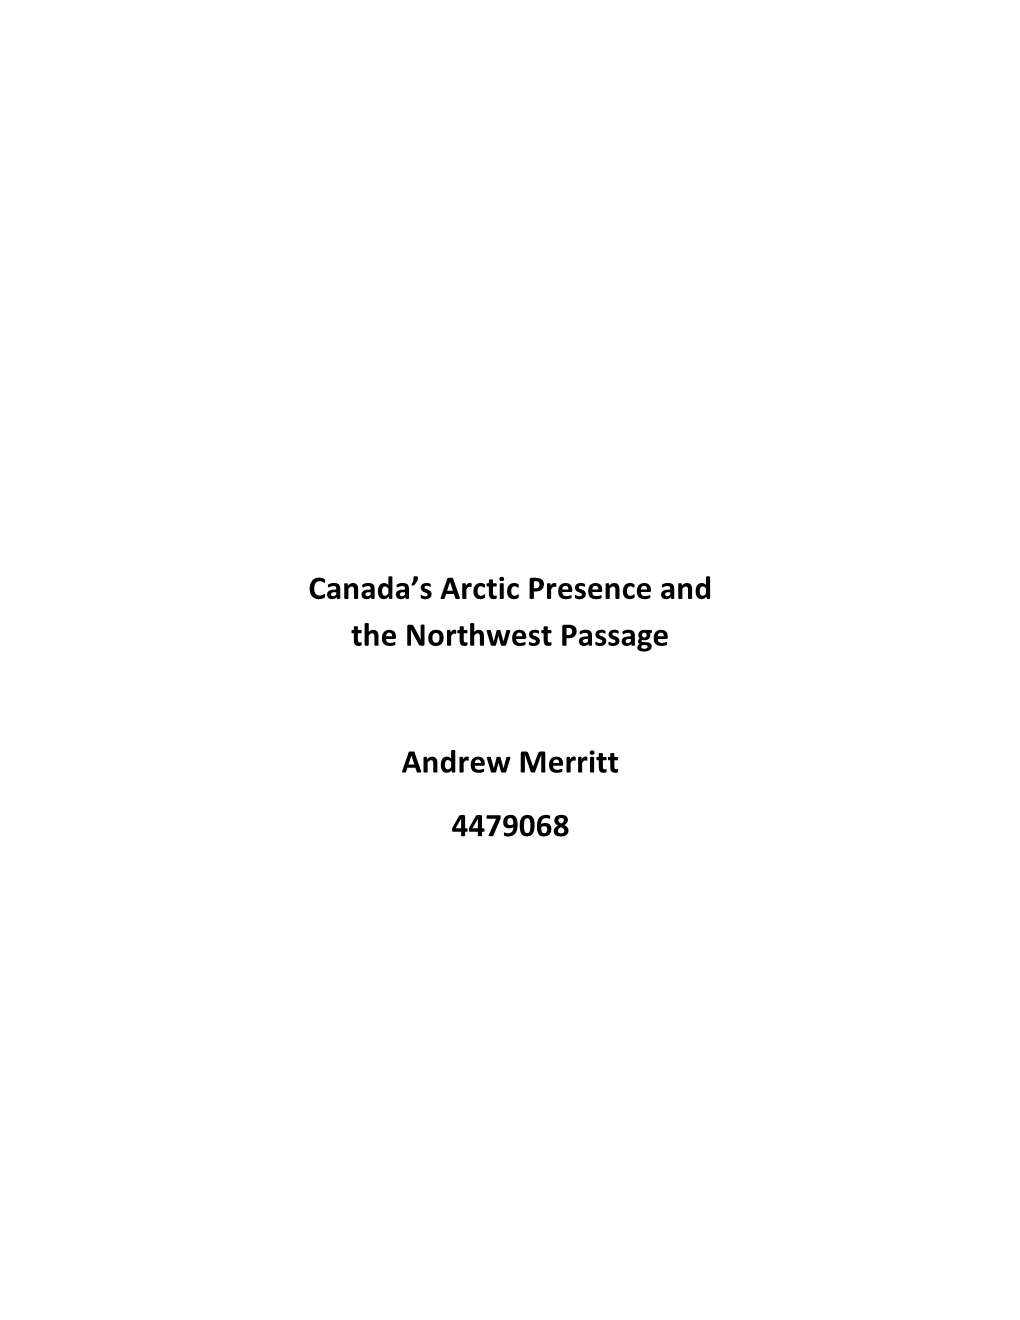 Canada's Arctic Presence and the Northwest Passage Andrew Merritt